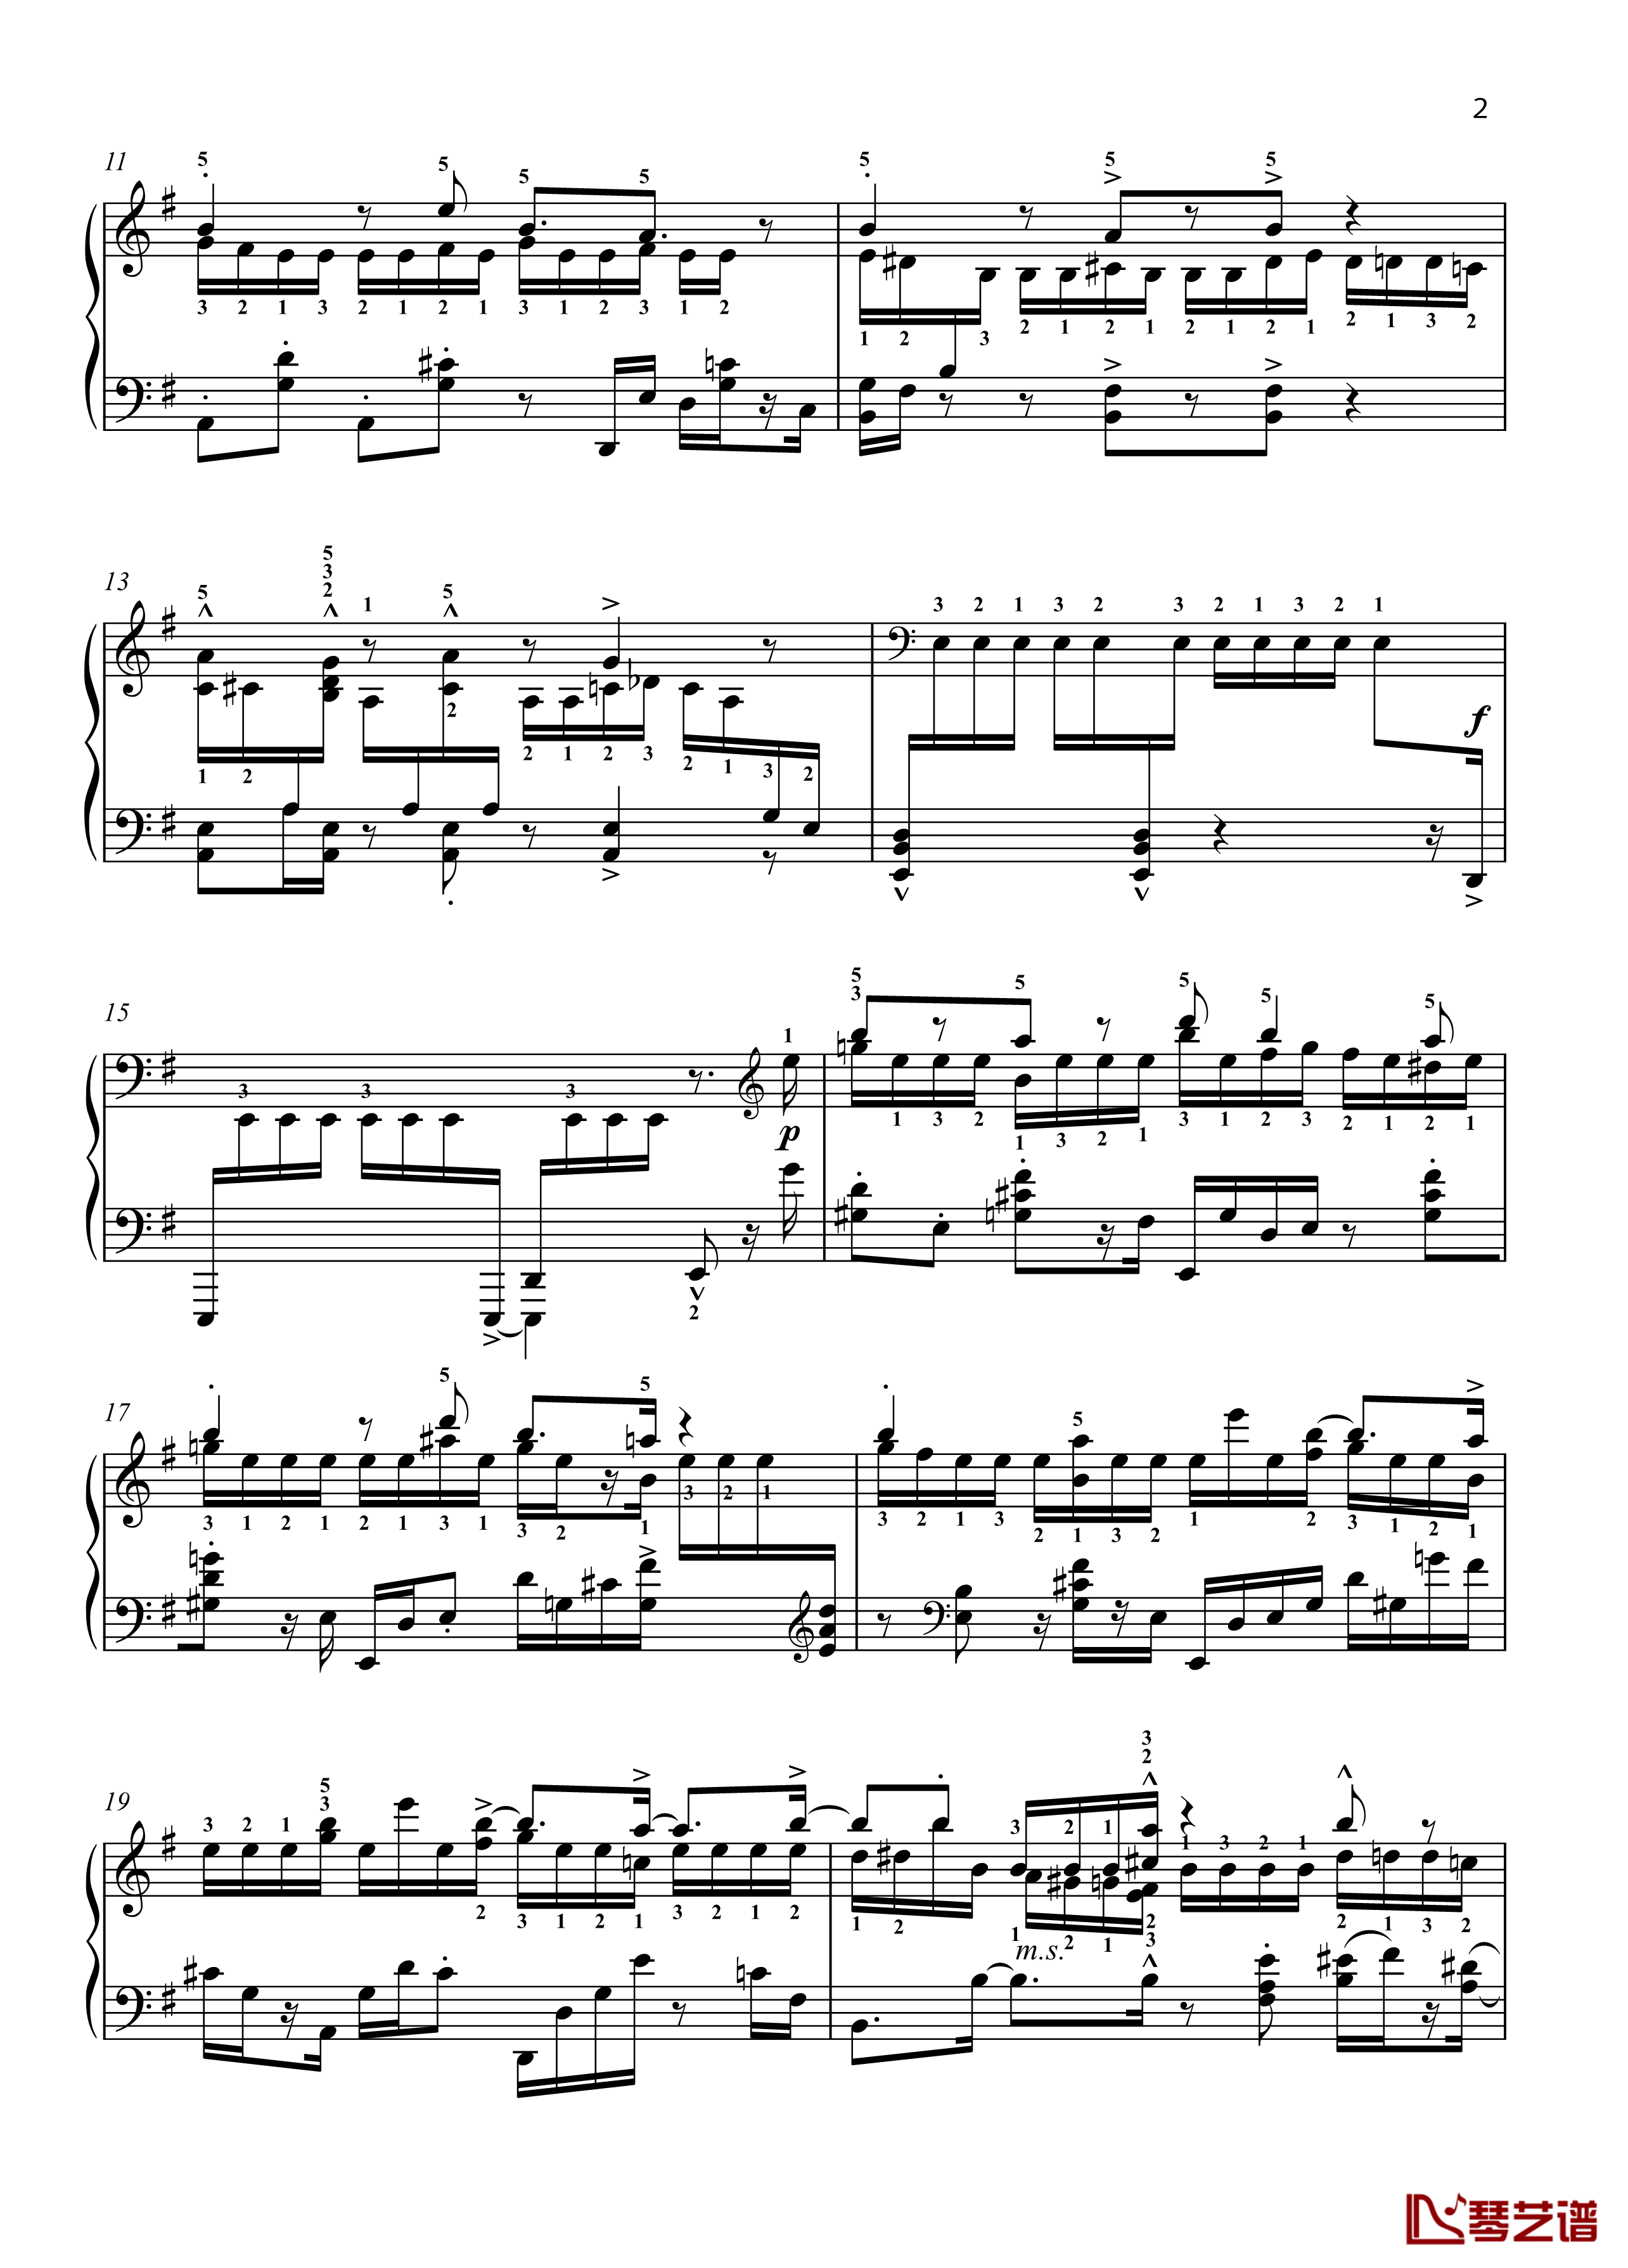 No. 3. Toccatina钢琴谱-带指法-八首音乐会练习曲 Eight Concert ?tudes Op 40-爵士-尼古拉·凯帕斯汀2